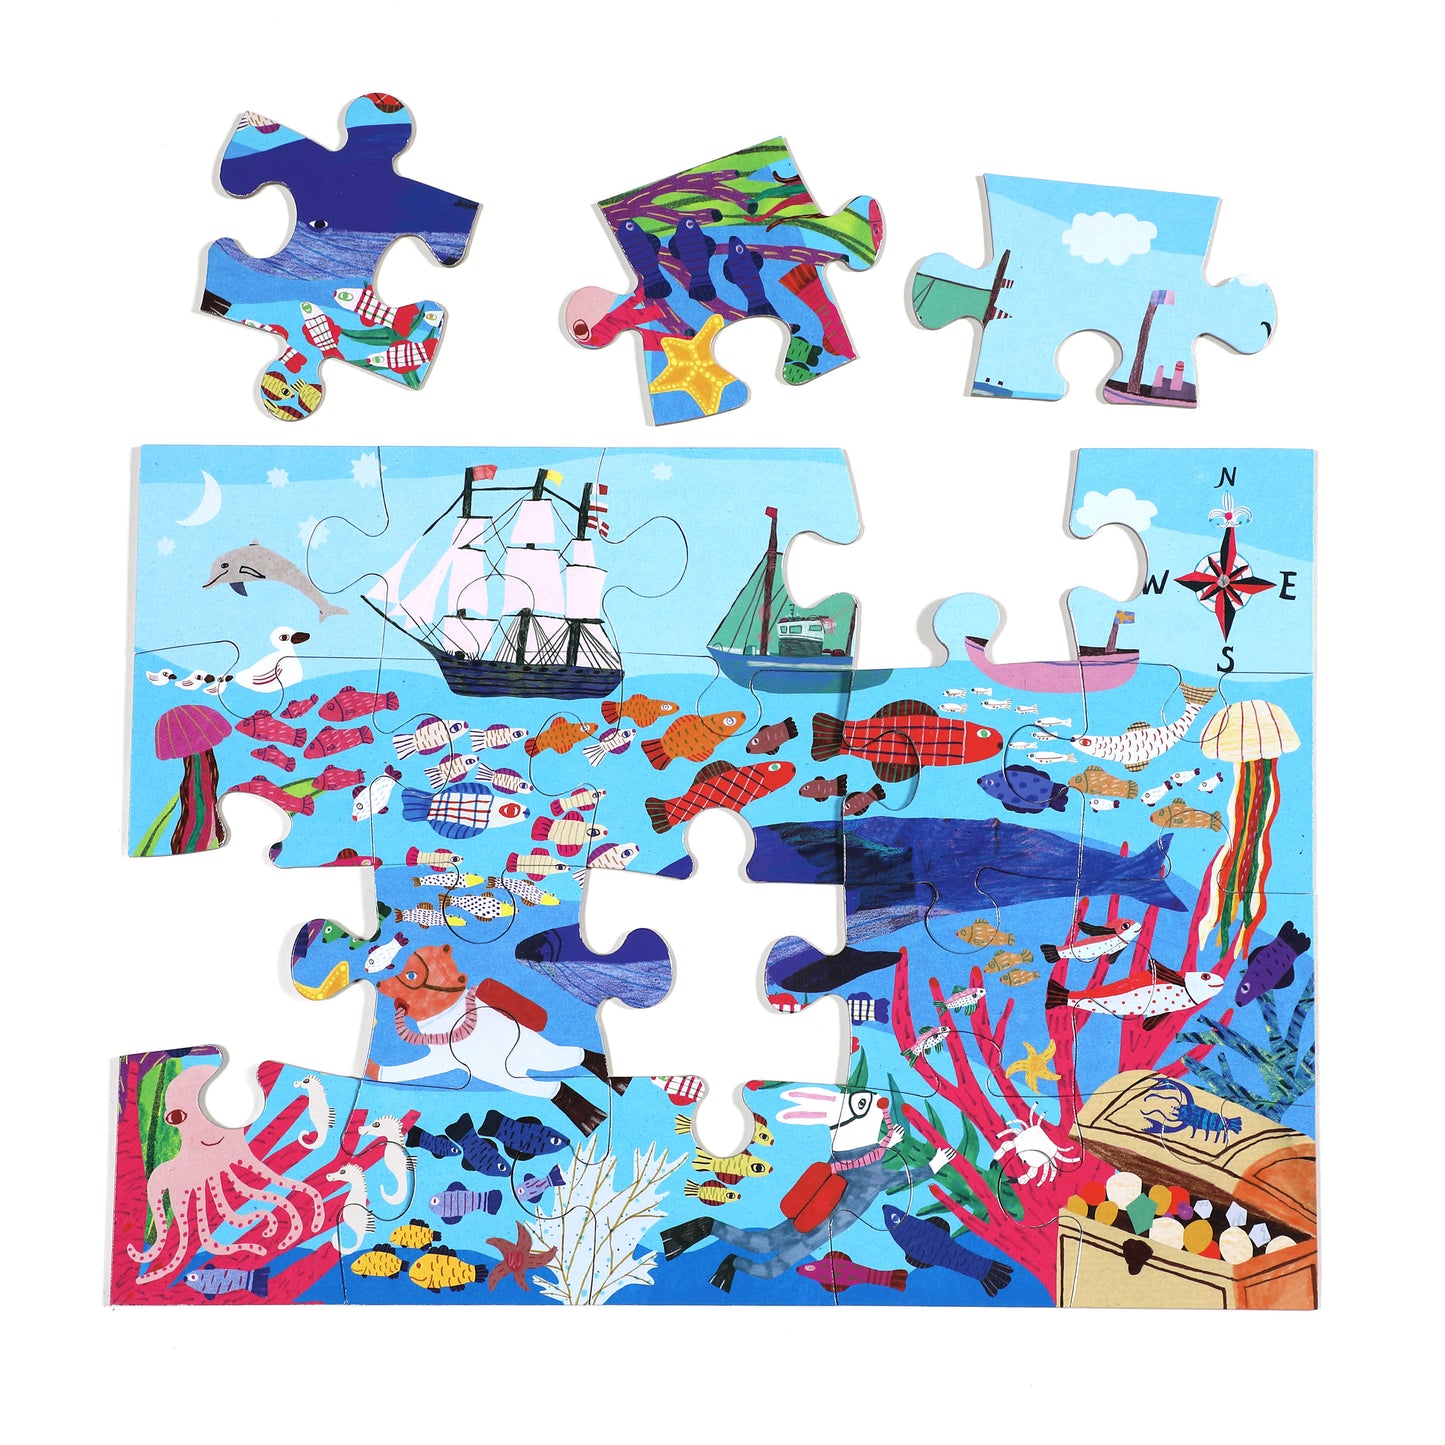 Sea Exploration Ocean 20 Piece Big Puzzle by eeBoo for Kids Ages 3+